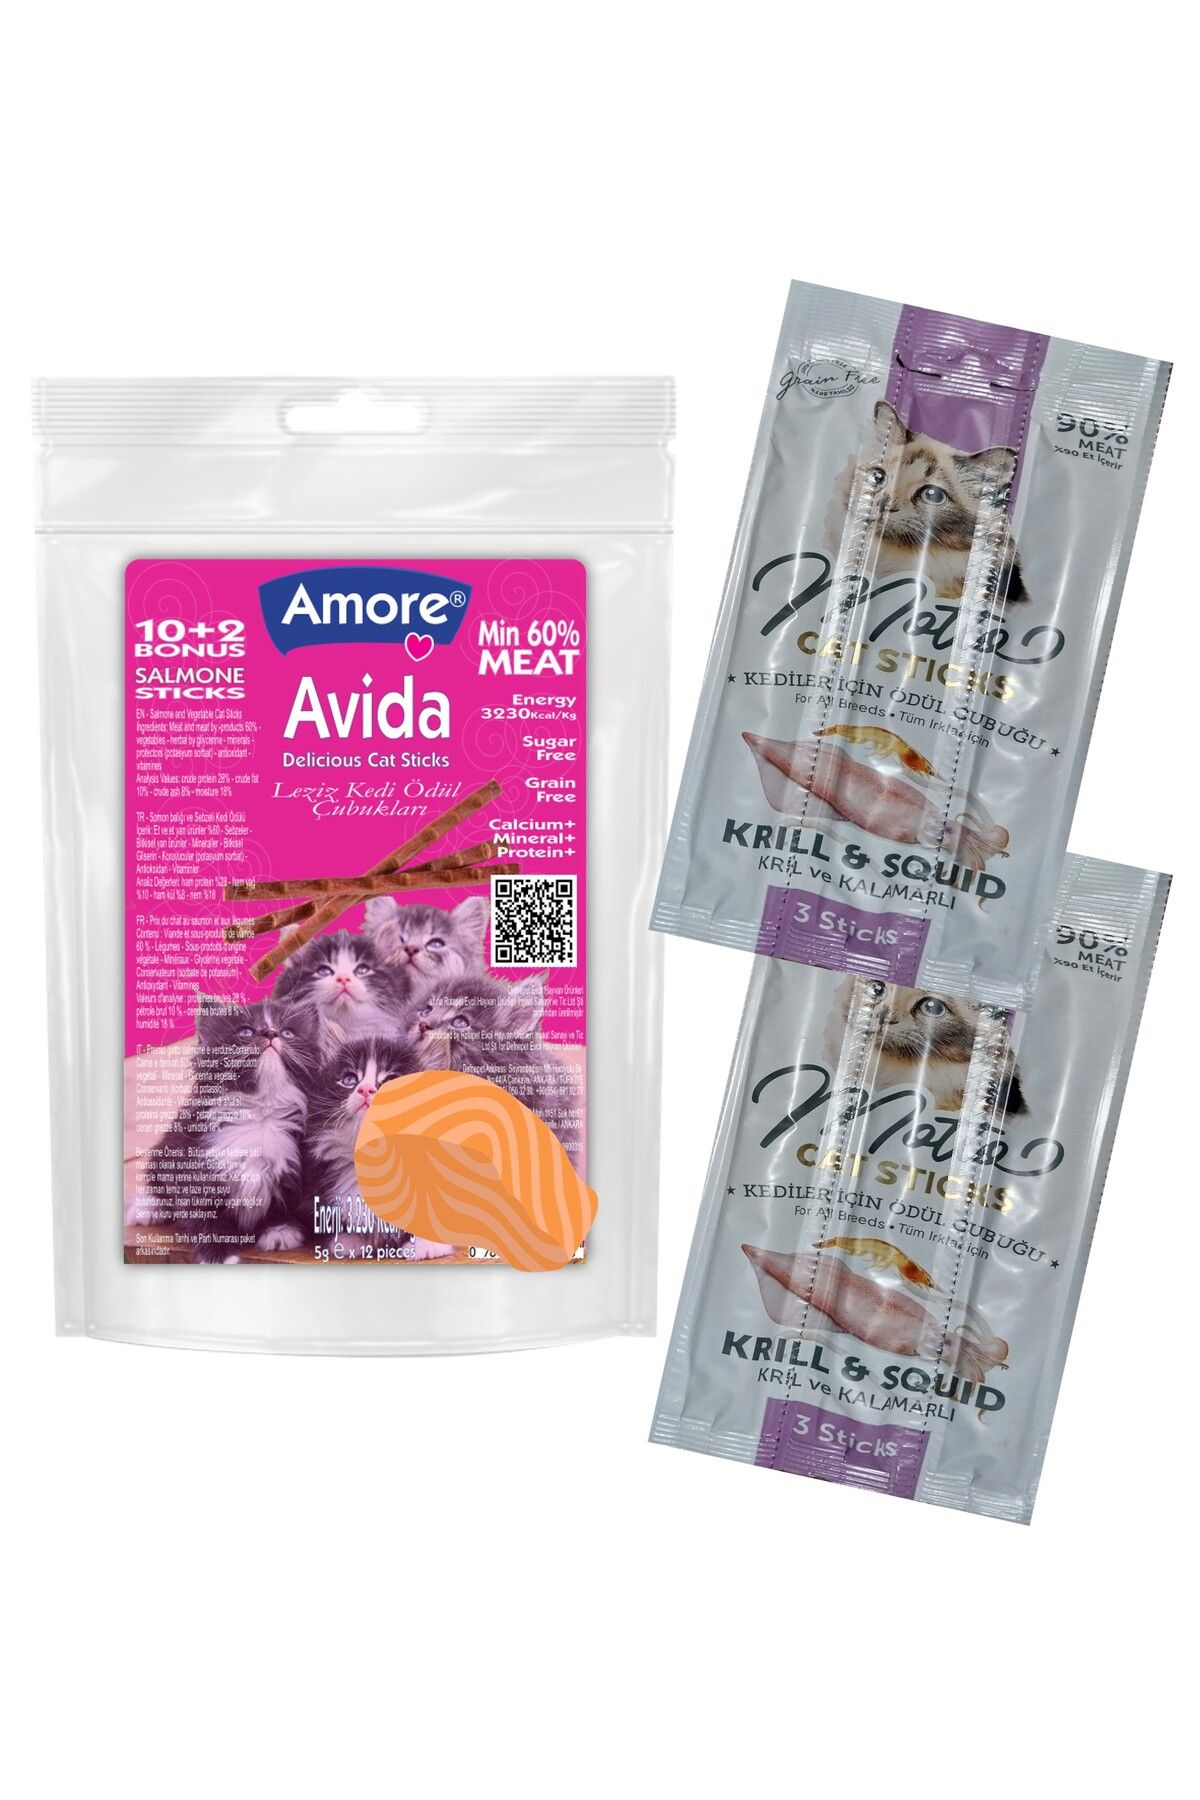 Amore Avida 12li Cat Sticks Balik ve Sebzeli Tahilsiz, Motto 2 adet 3lu Kril ve Kalamarli Kedi Odulu